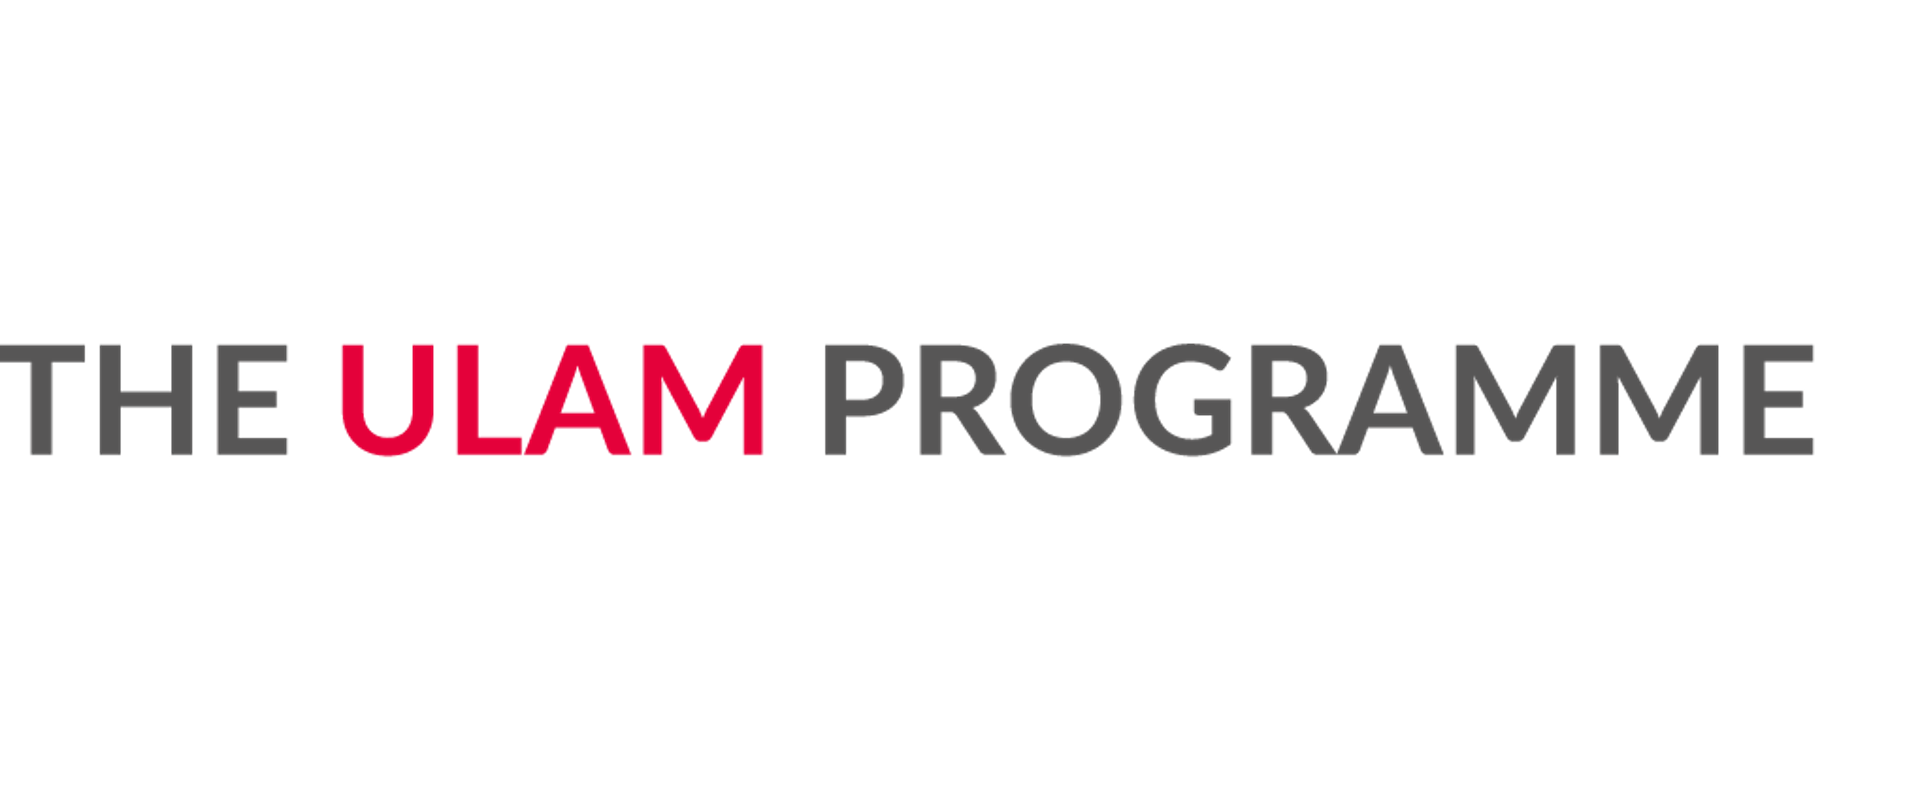 The ULAM Programme